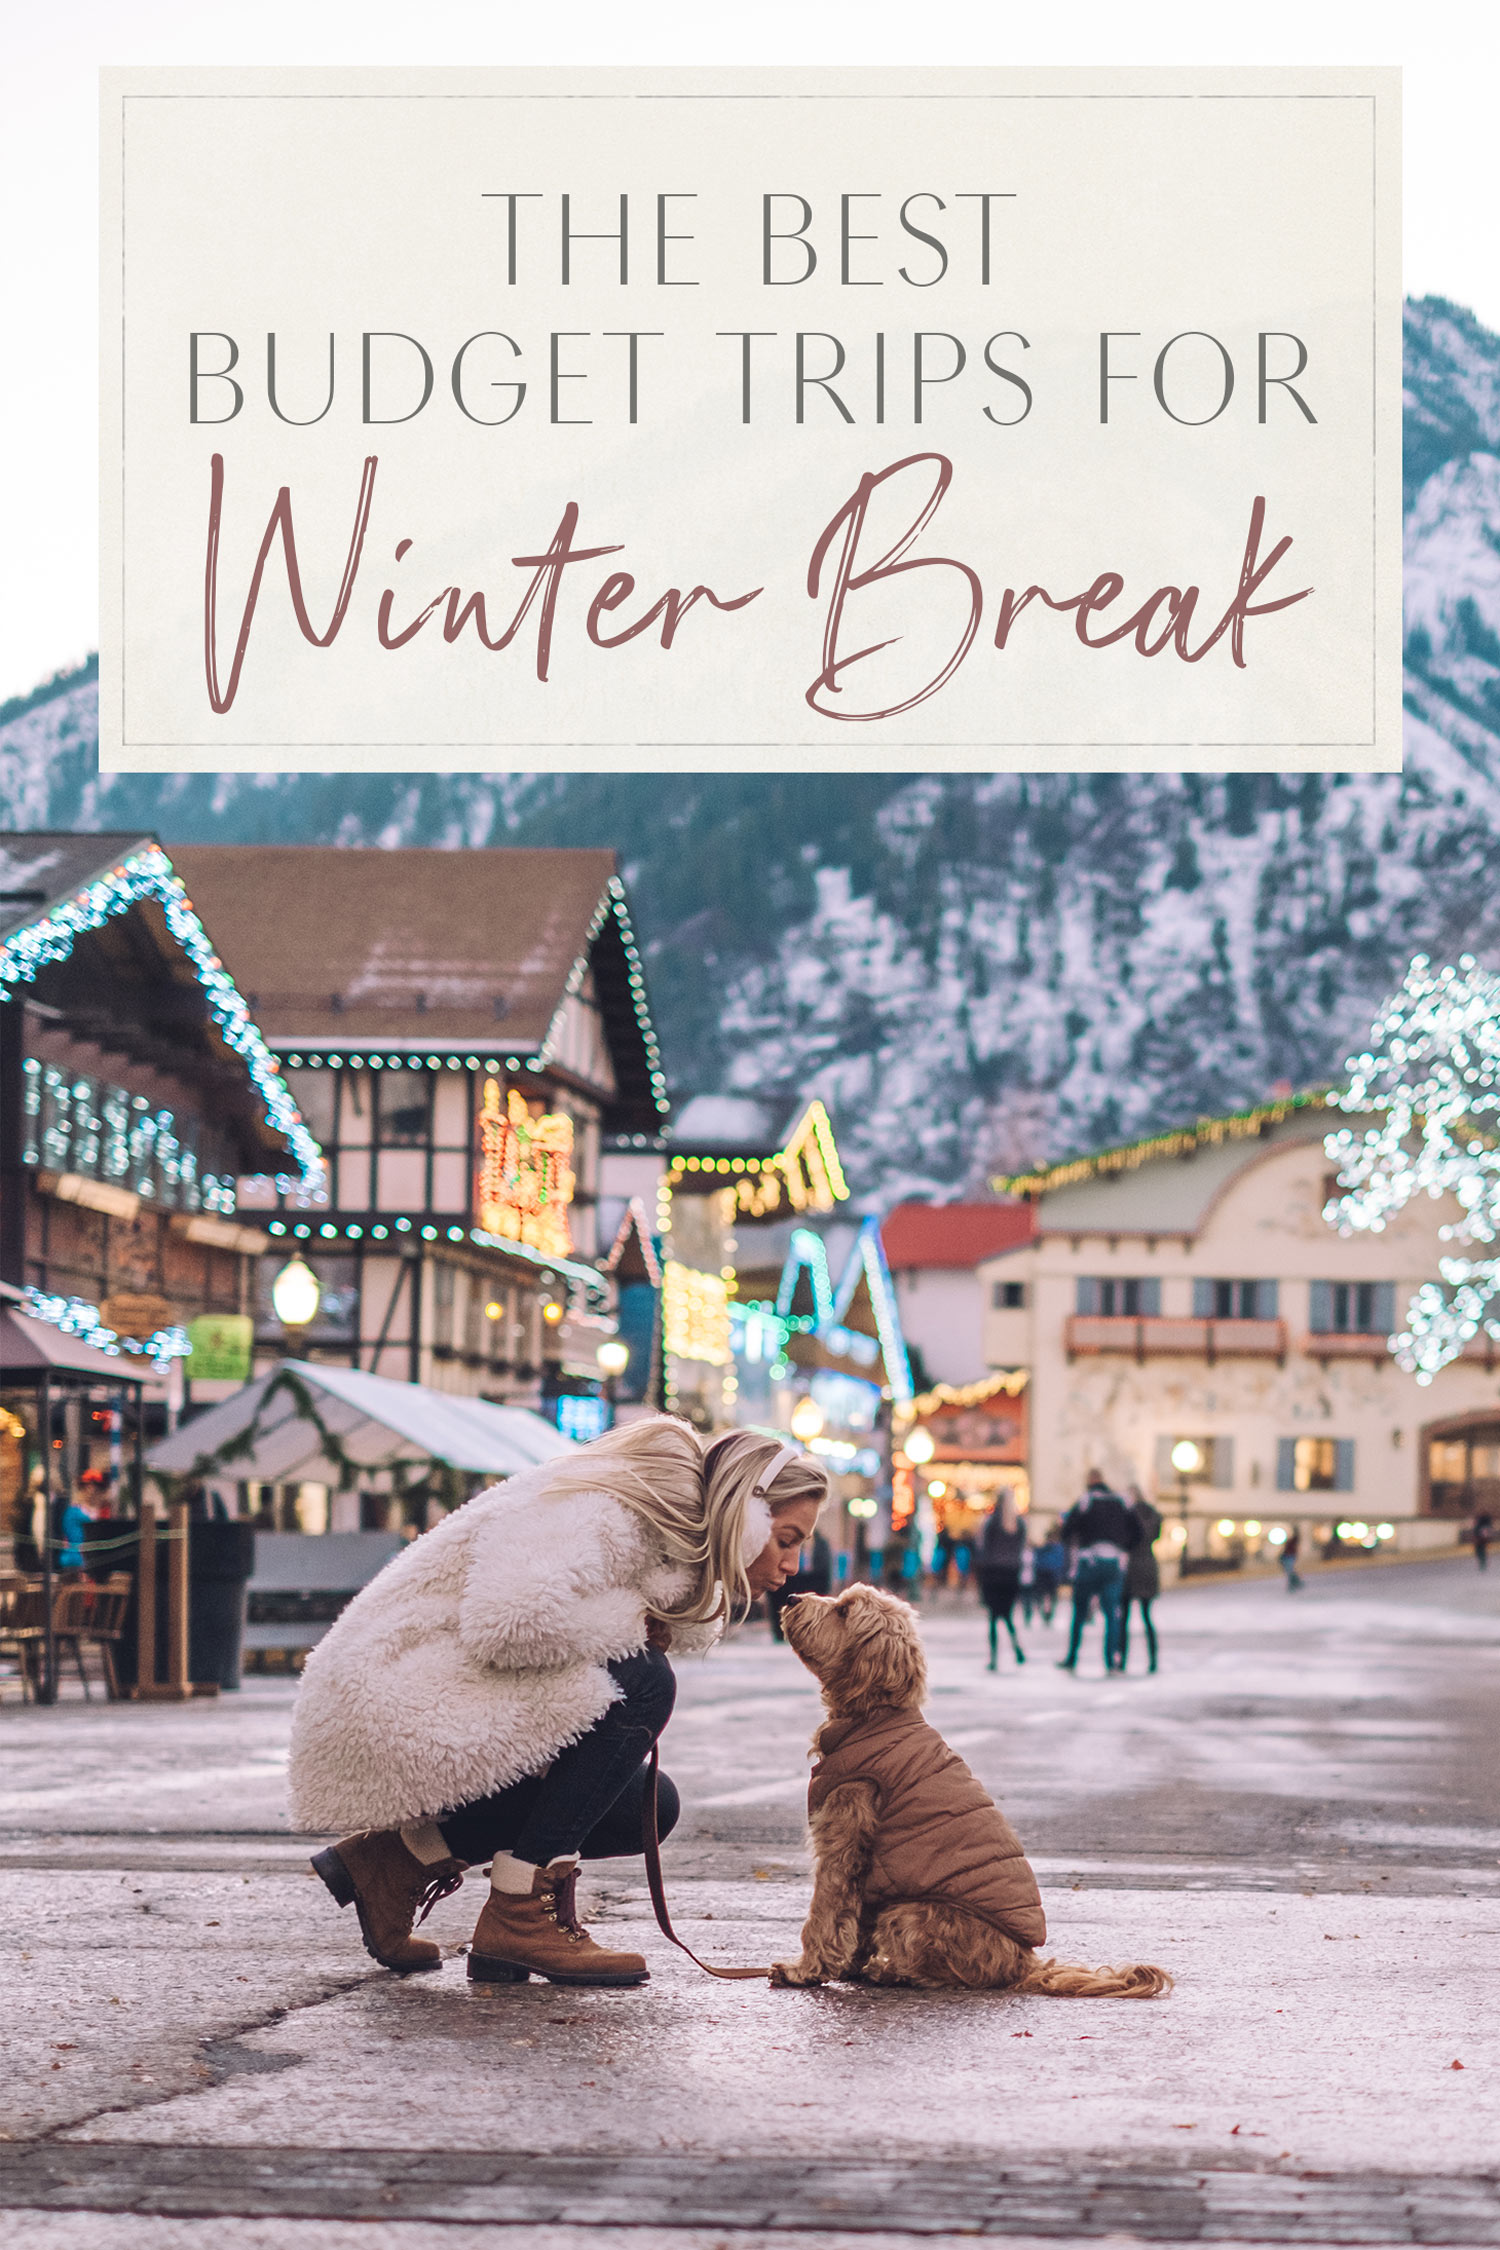 The Best Budget Trips for Winter Break